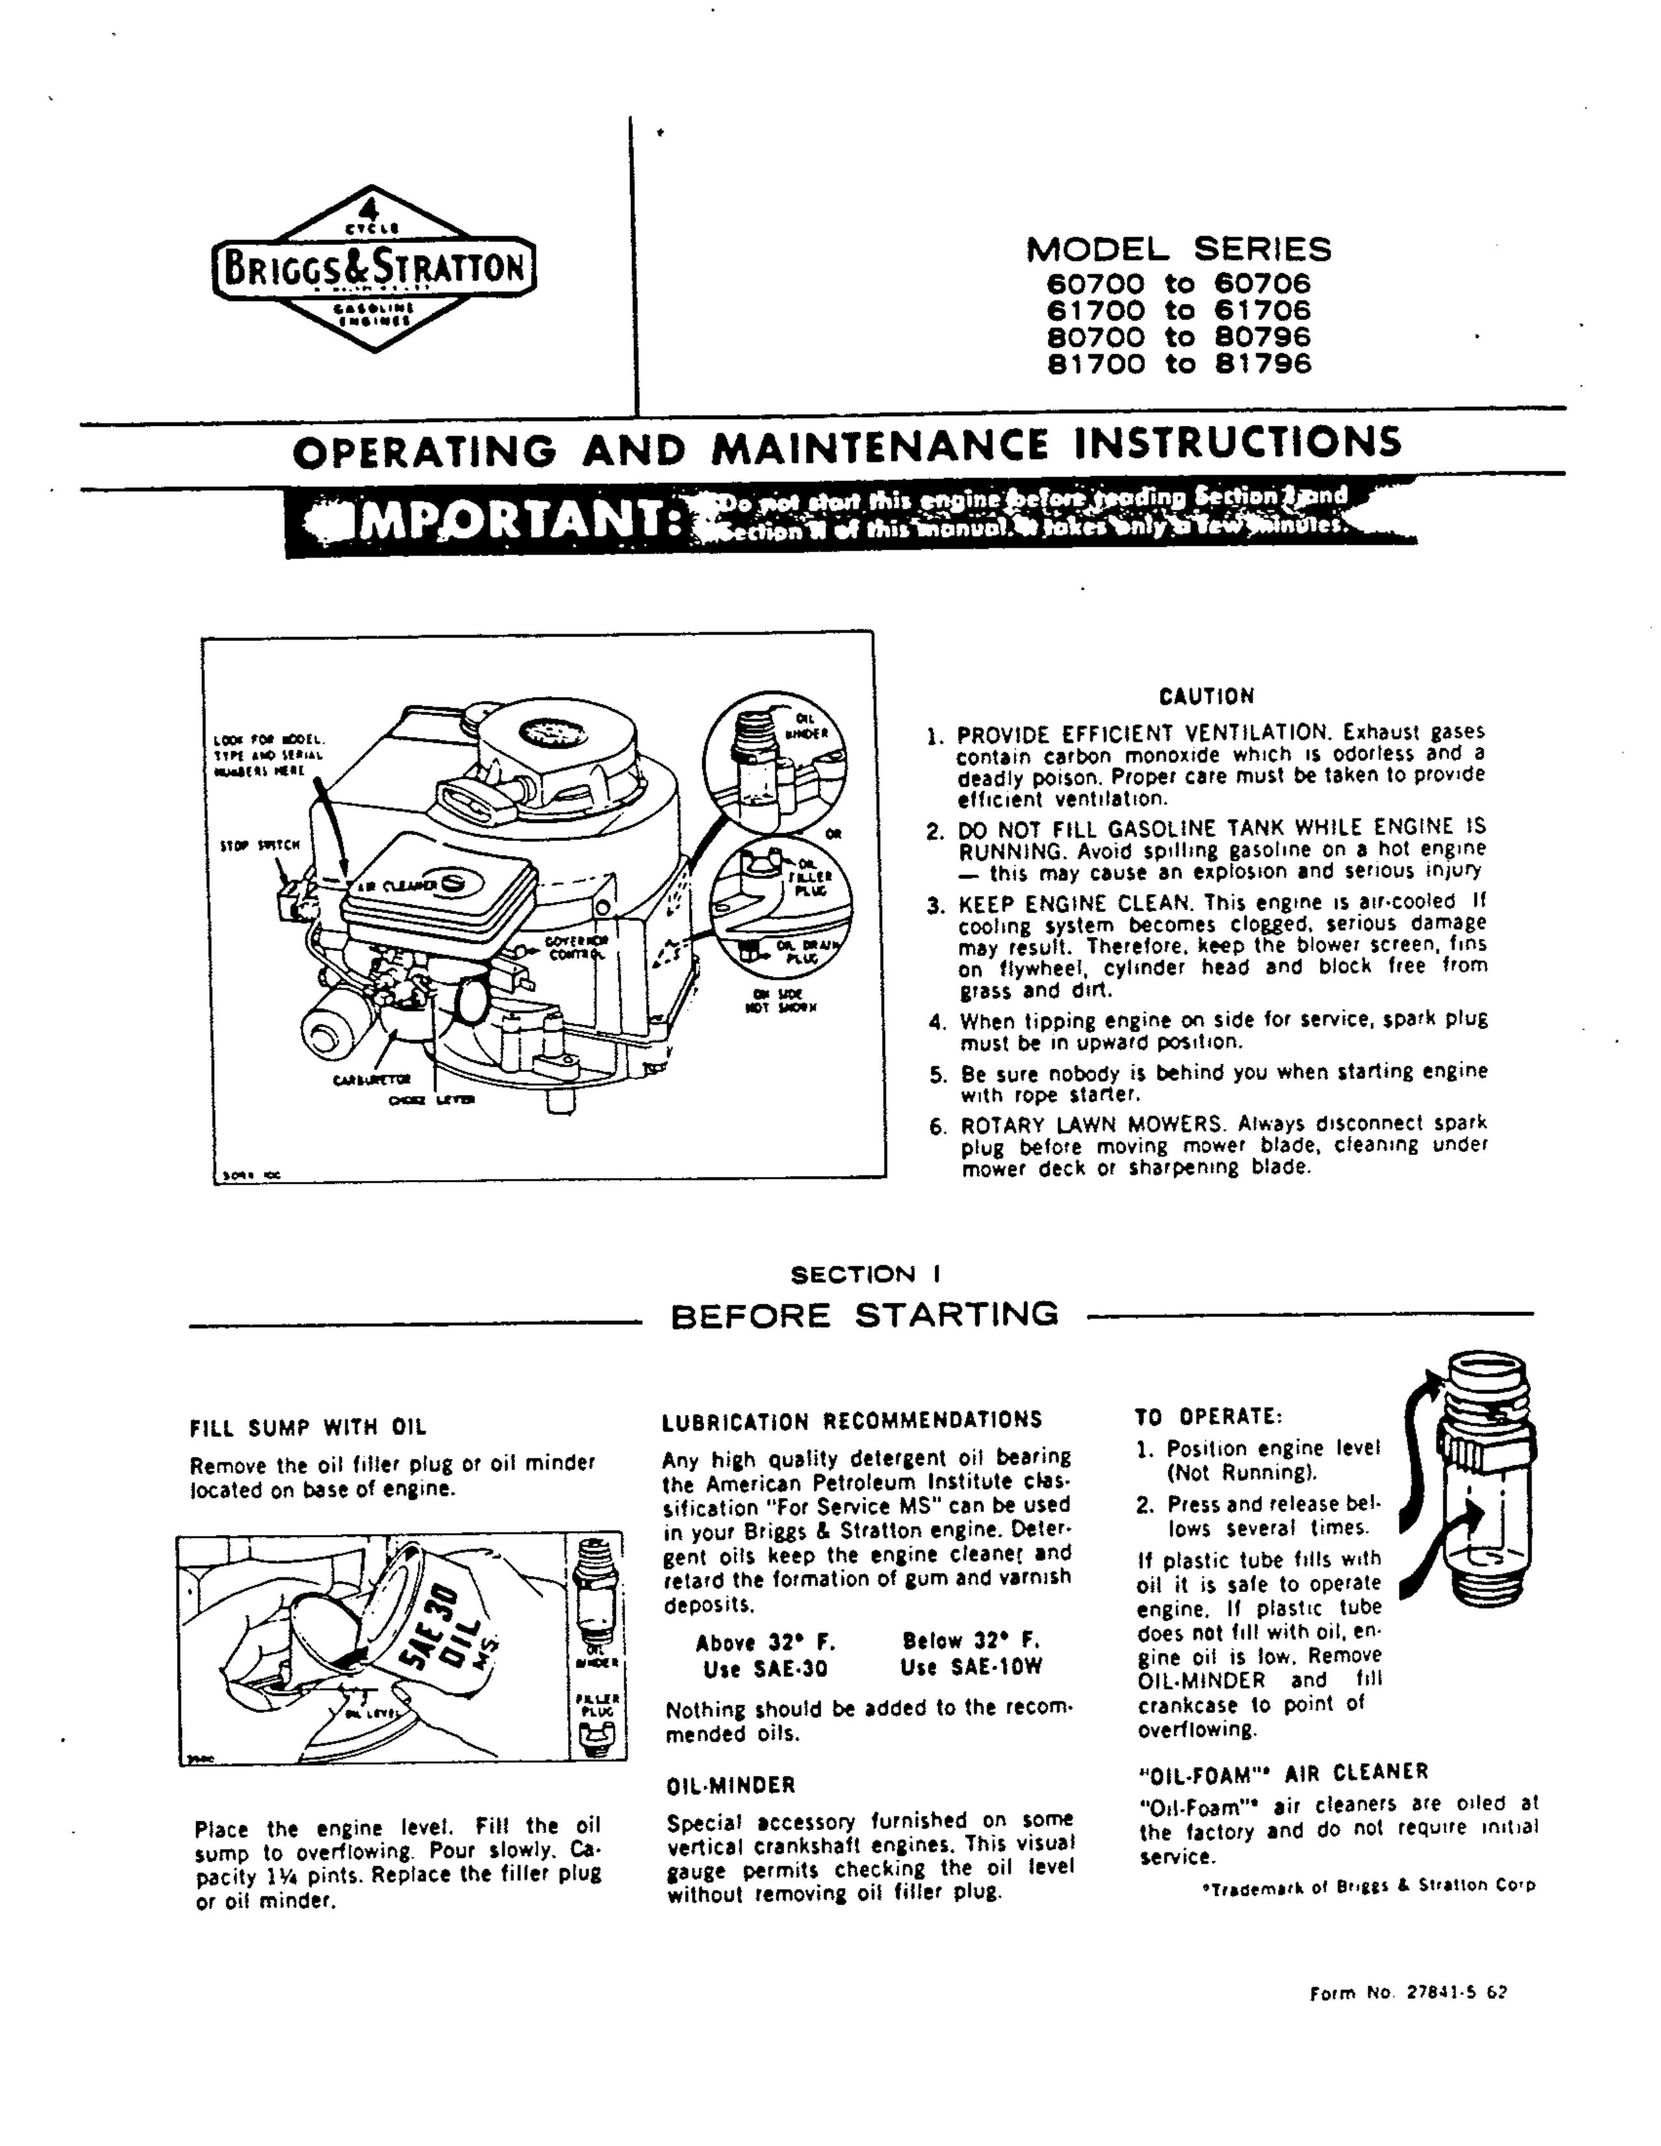 Briggs & Stratton 80700- 80796 Building Set User Manual